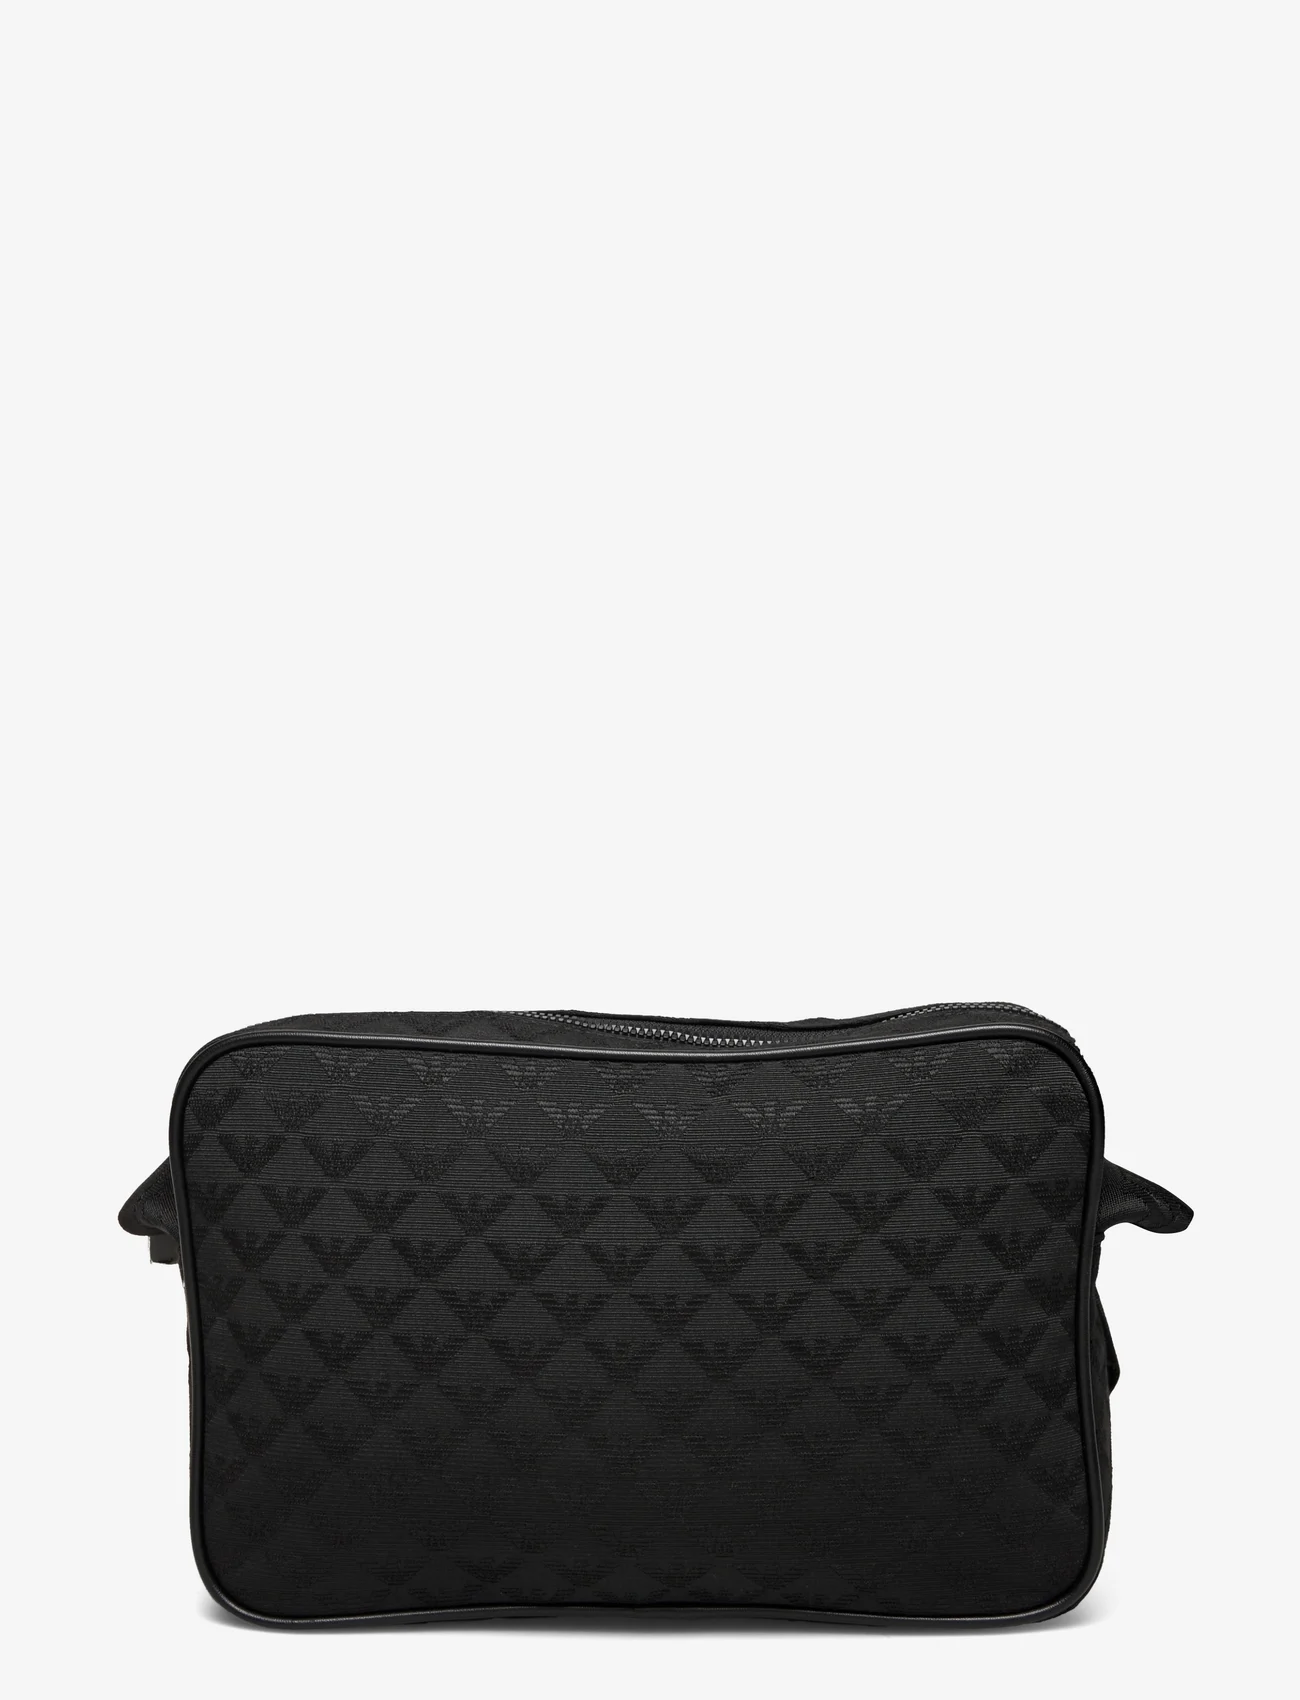 Emporio Armani - SHOULDER BAG - shoulder bags - black/black/black - 1